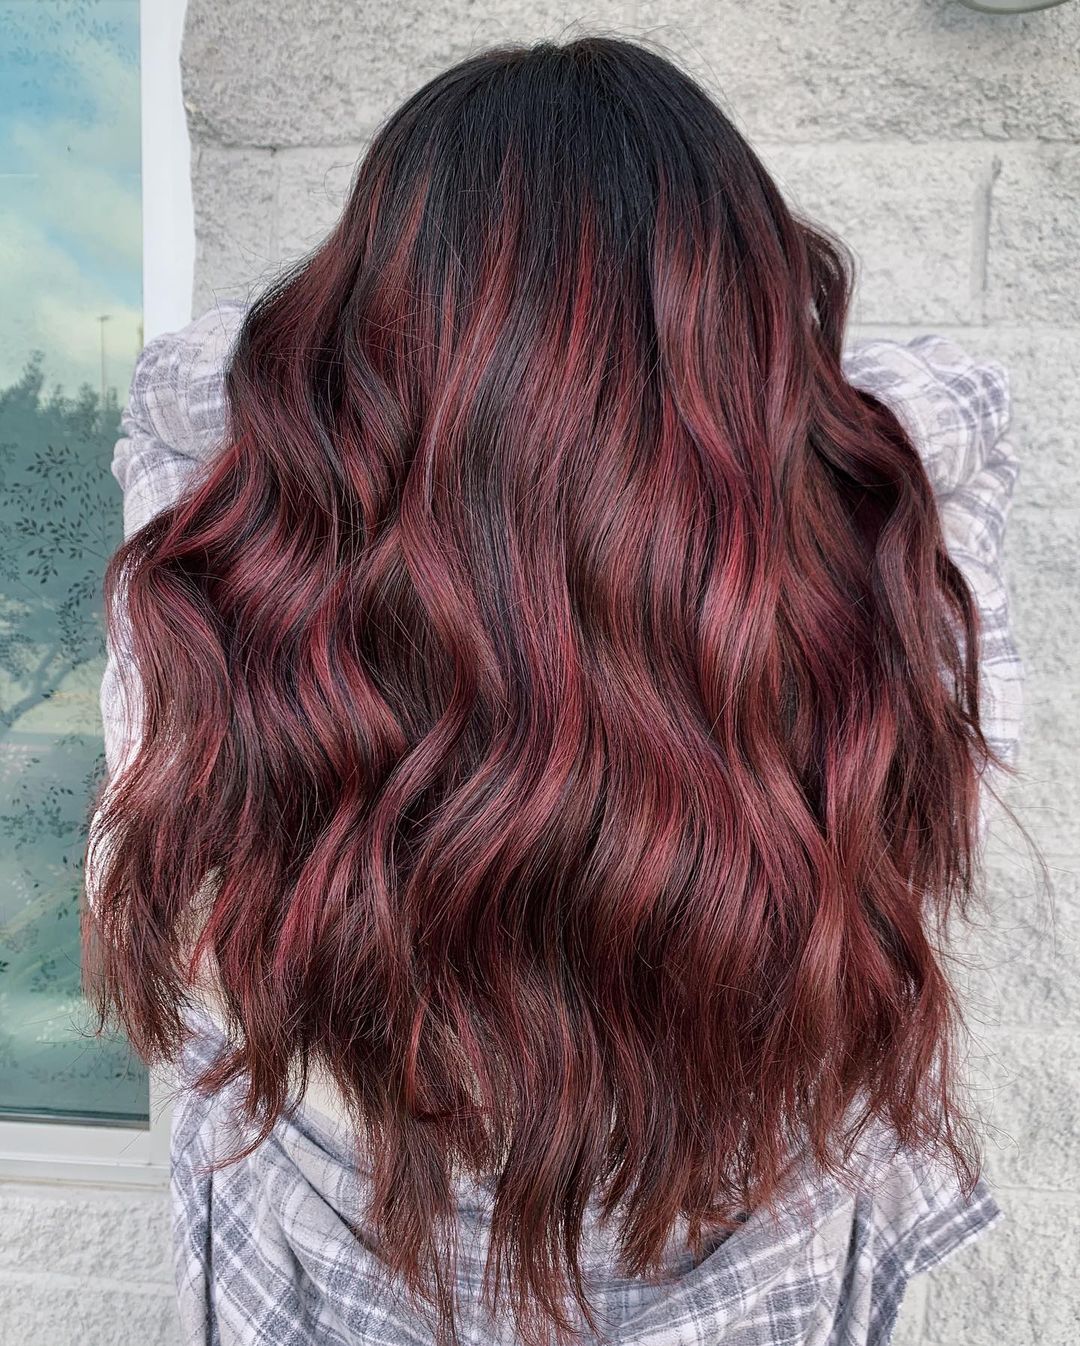 Stunning red highlights on dark brown hair